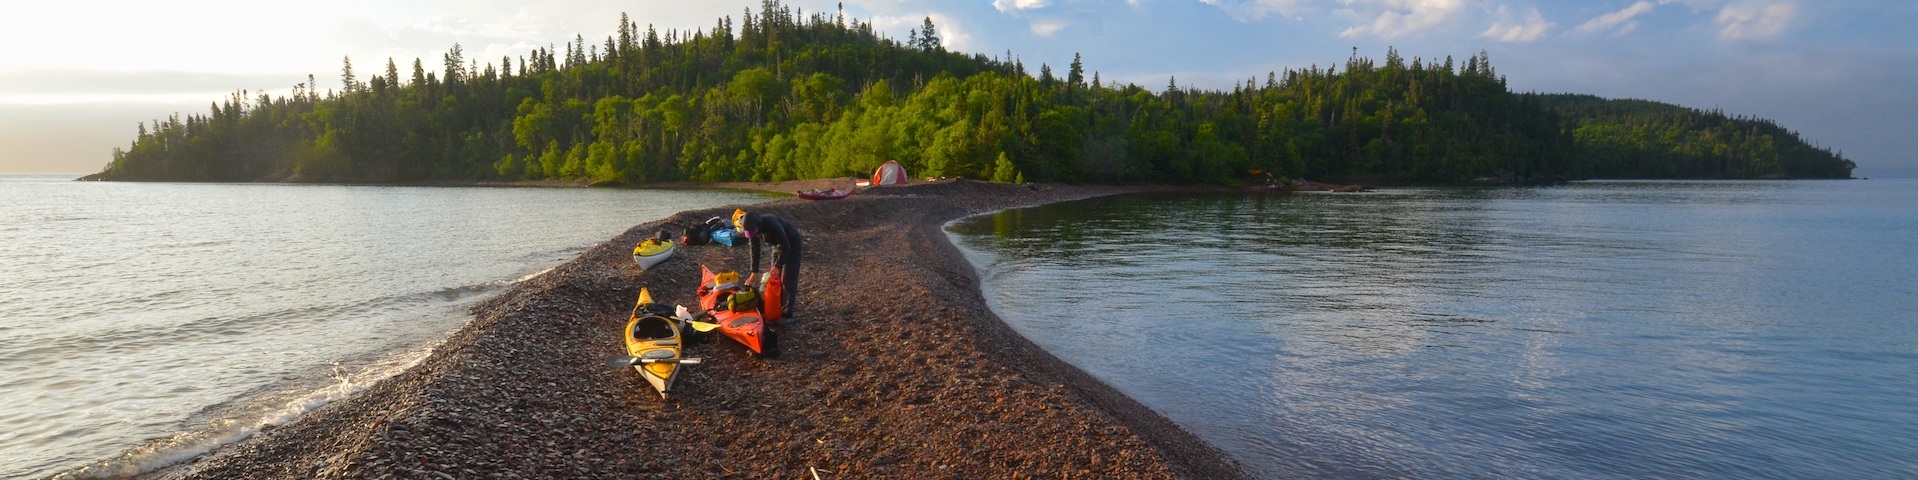 Lake Superior - Sea Kayak the Sibley Penisula by Naturally Superior Adventures - Image 234